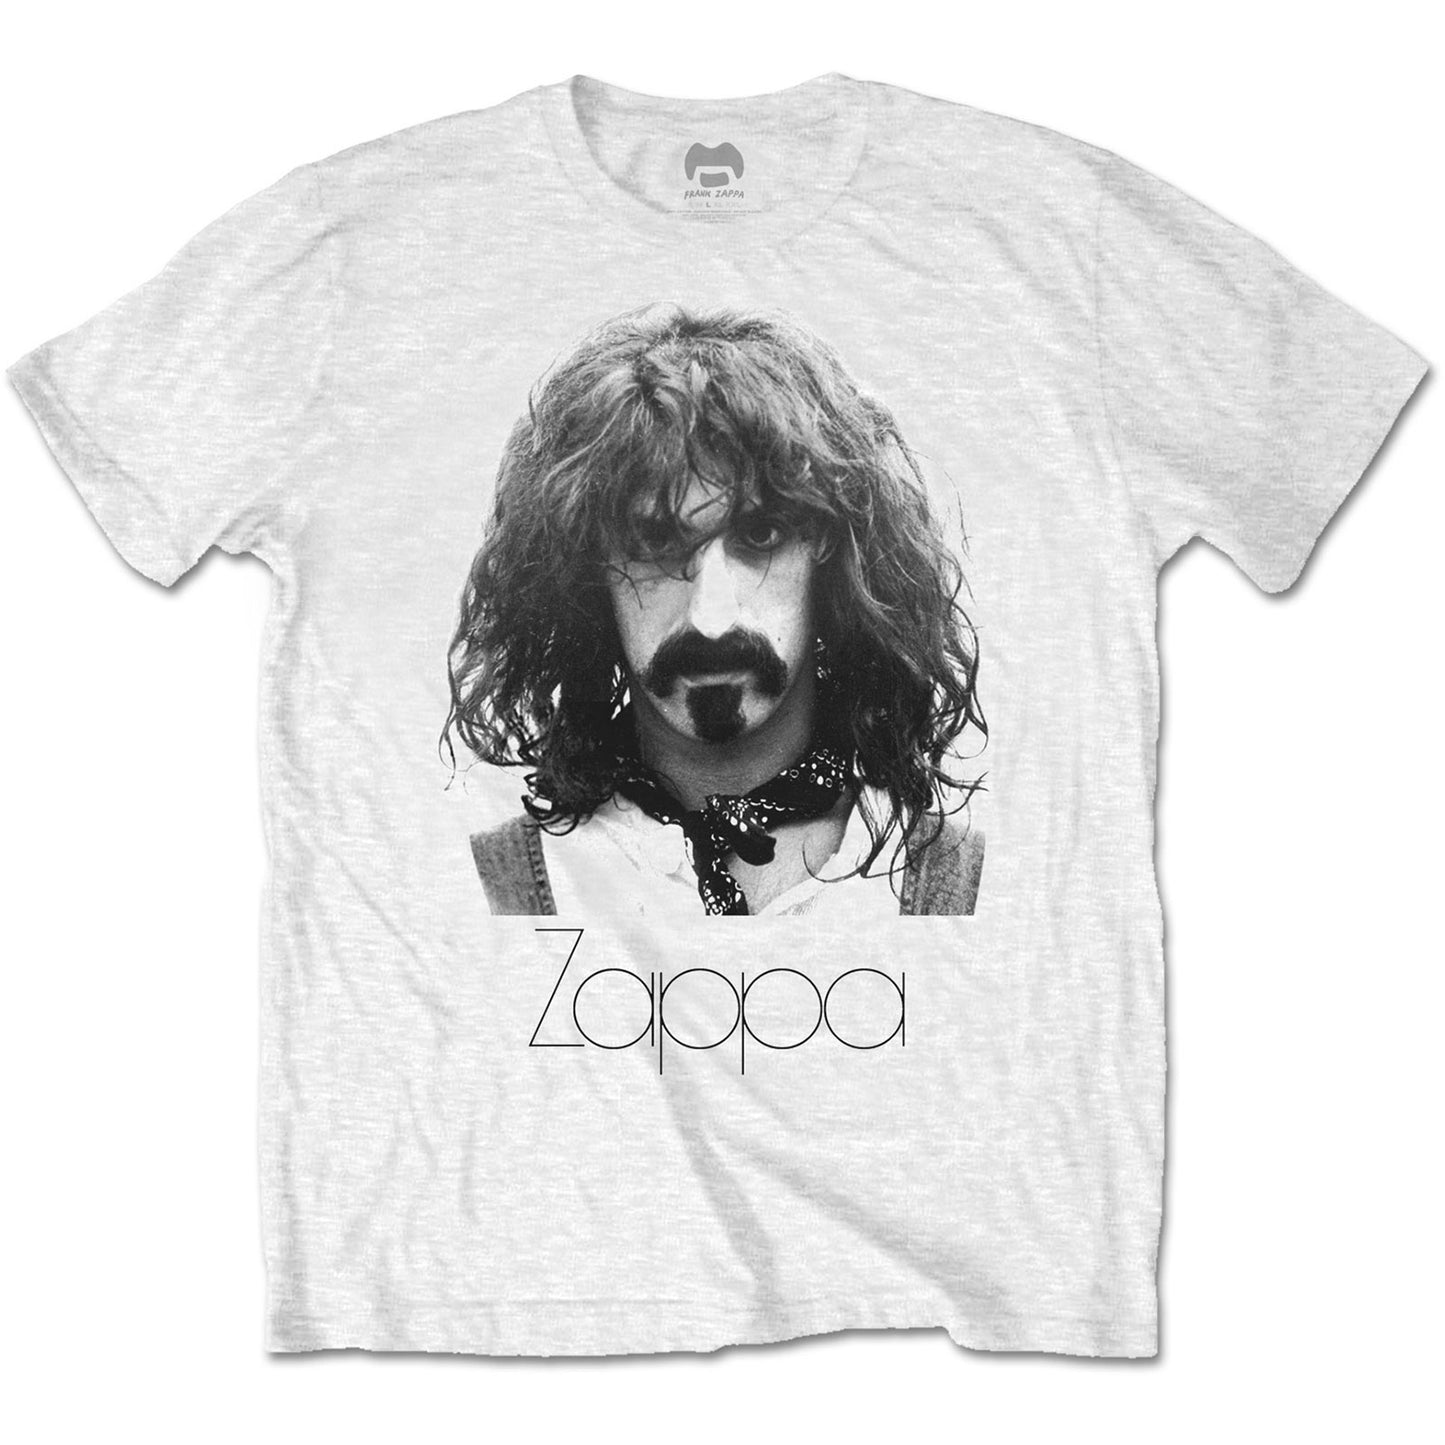 Frank Zappa T-Shirt: Thin Logo Portrait